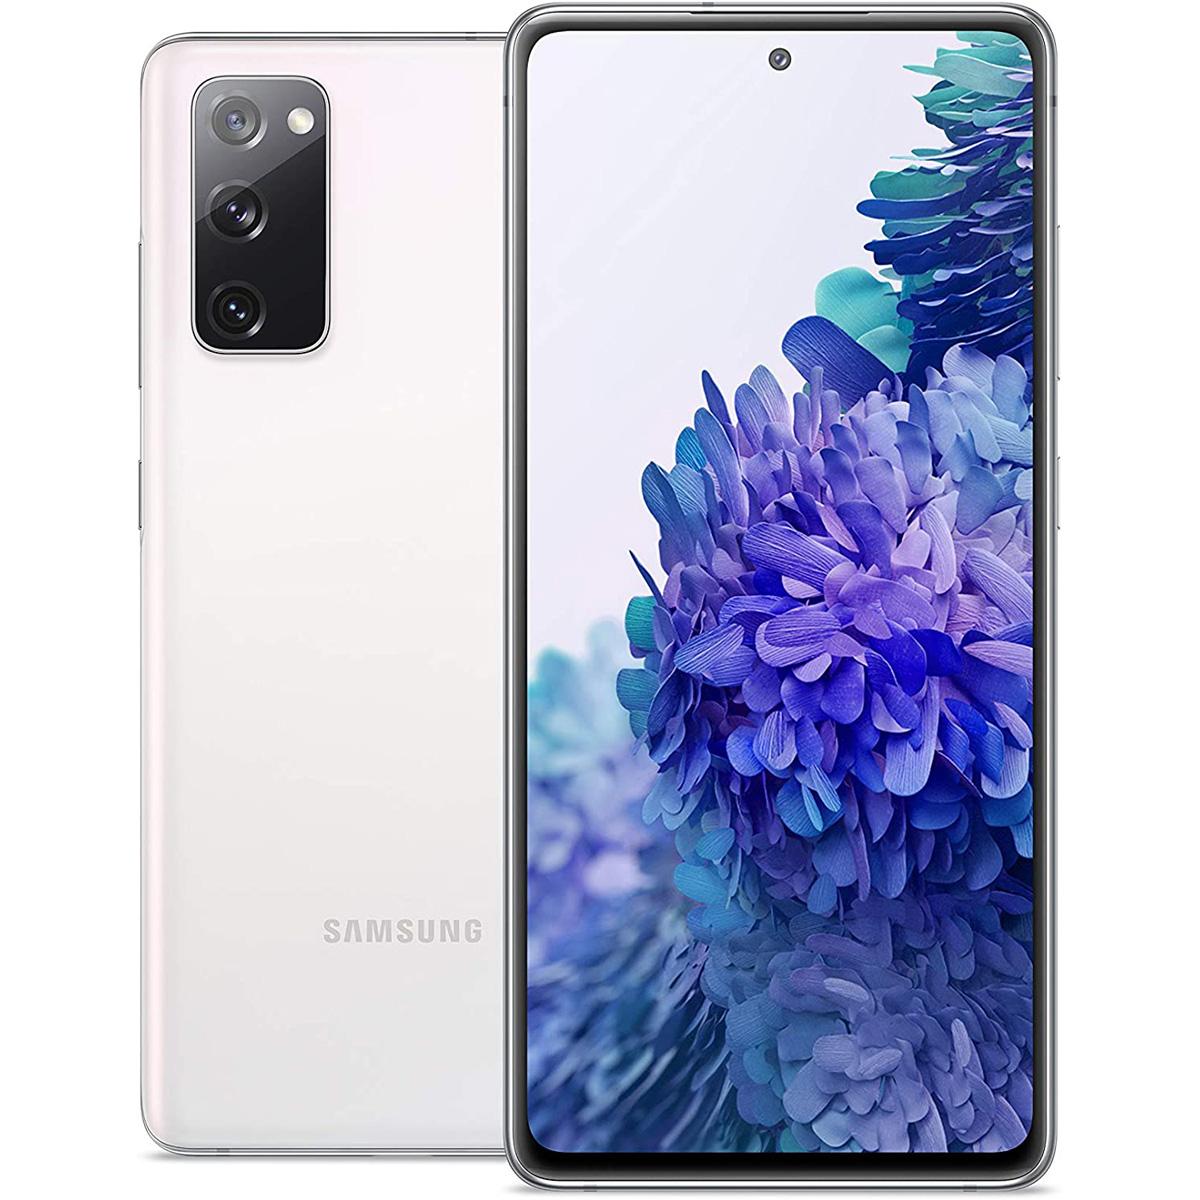 Samsung Galaxy S20 5G 128GB Unlocked Smartphone for $479 Shipped